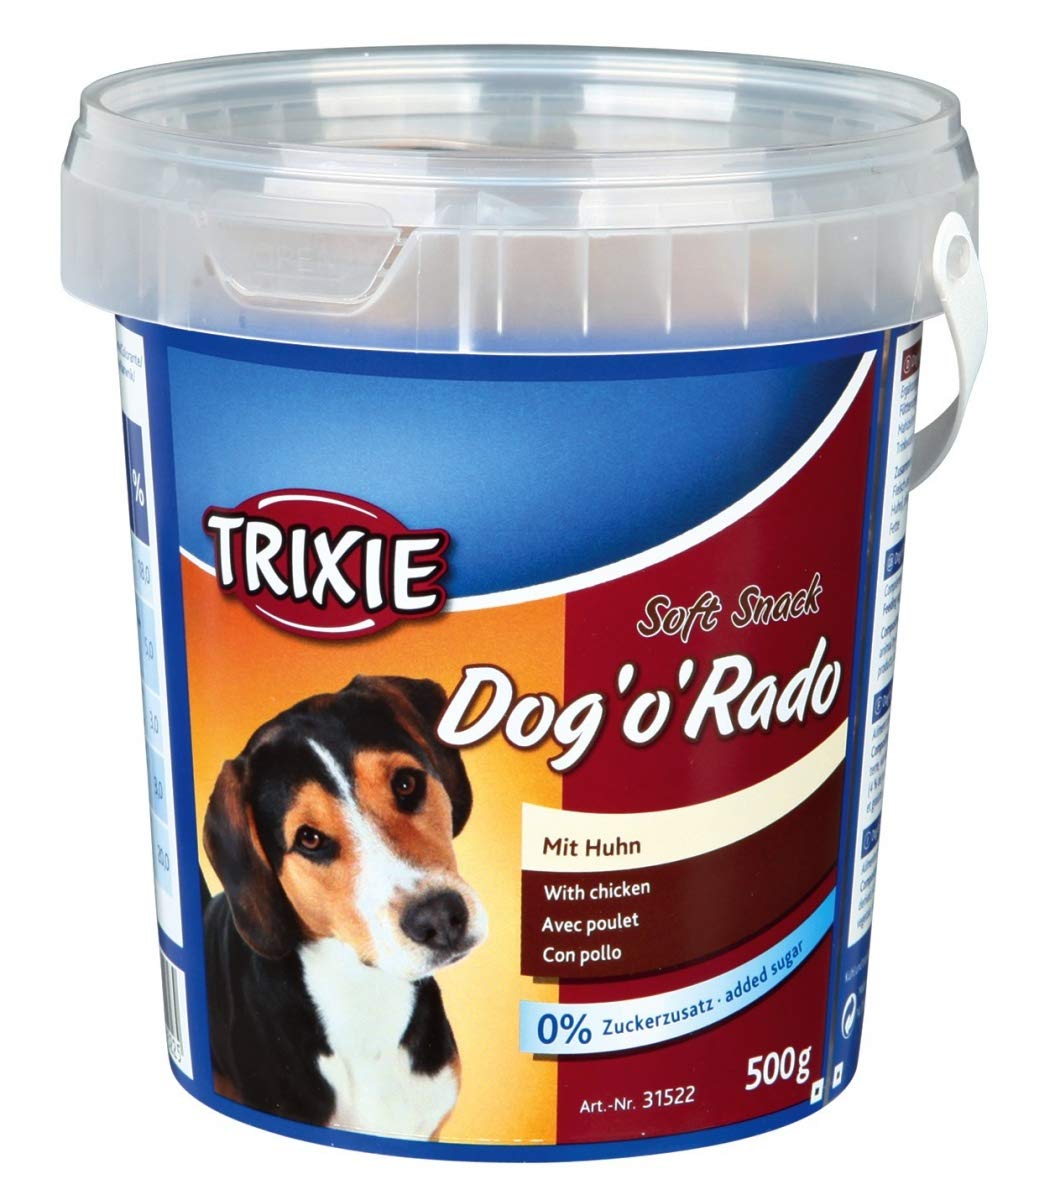 Trixie Dog'o'Rado Dog Treats